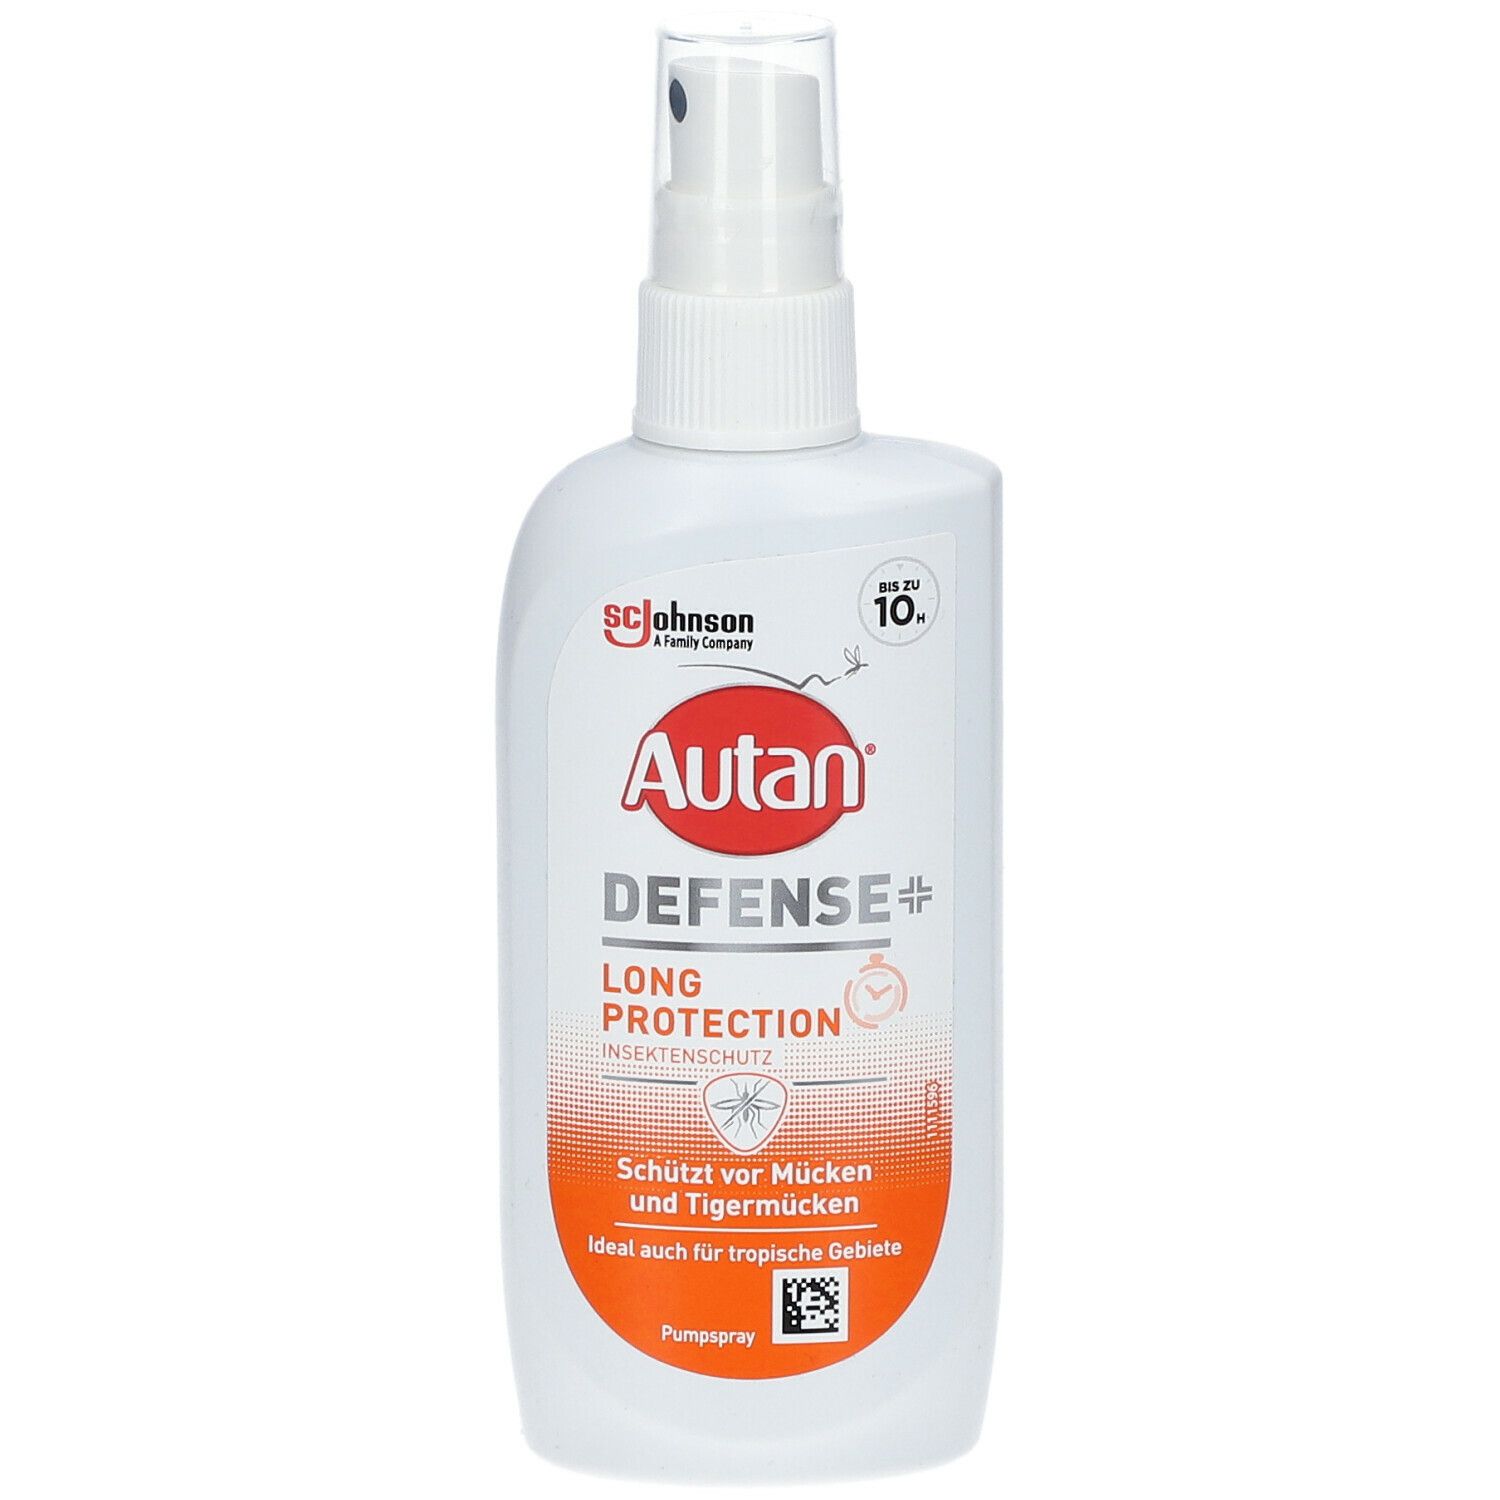 Autan® Defense Long Protection